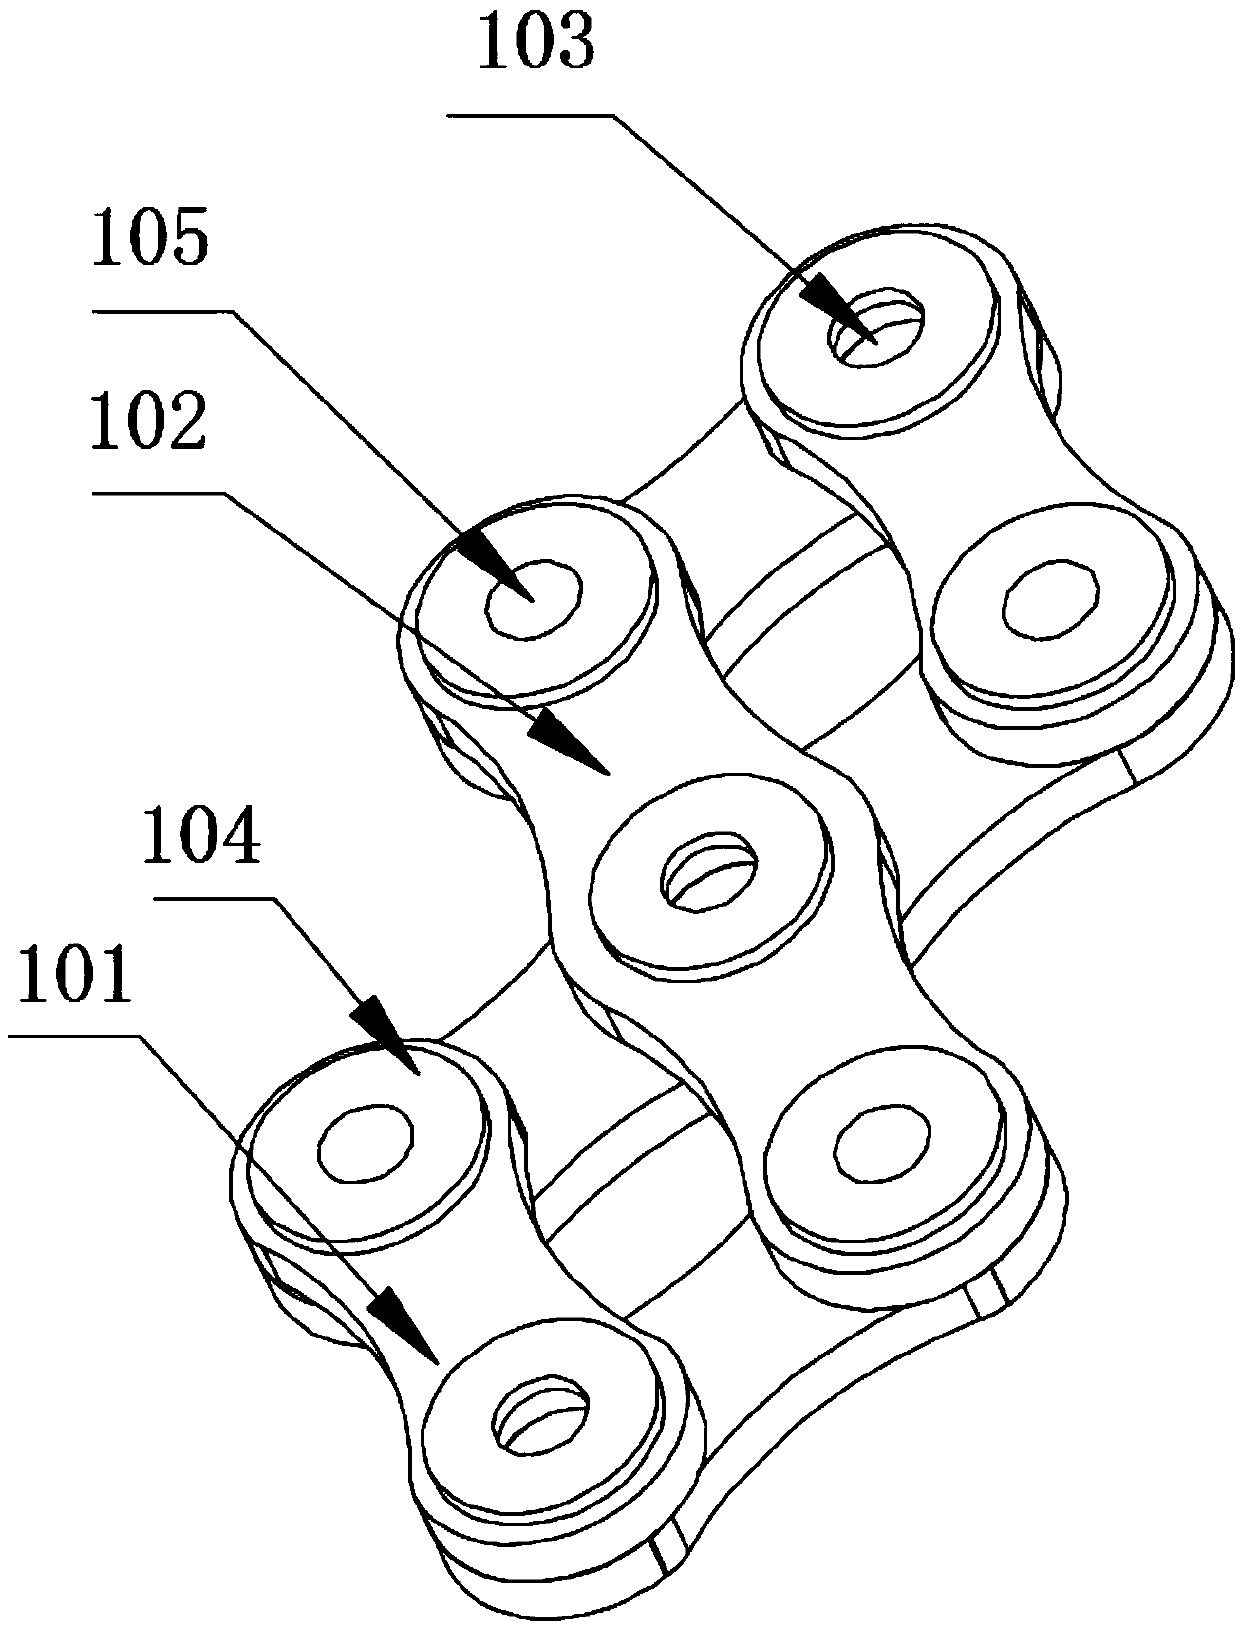 Cross-beam-free type dispersing deflexion expansion joint mechanism